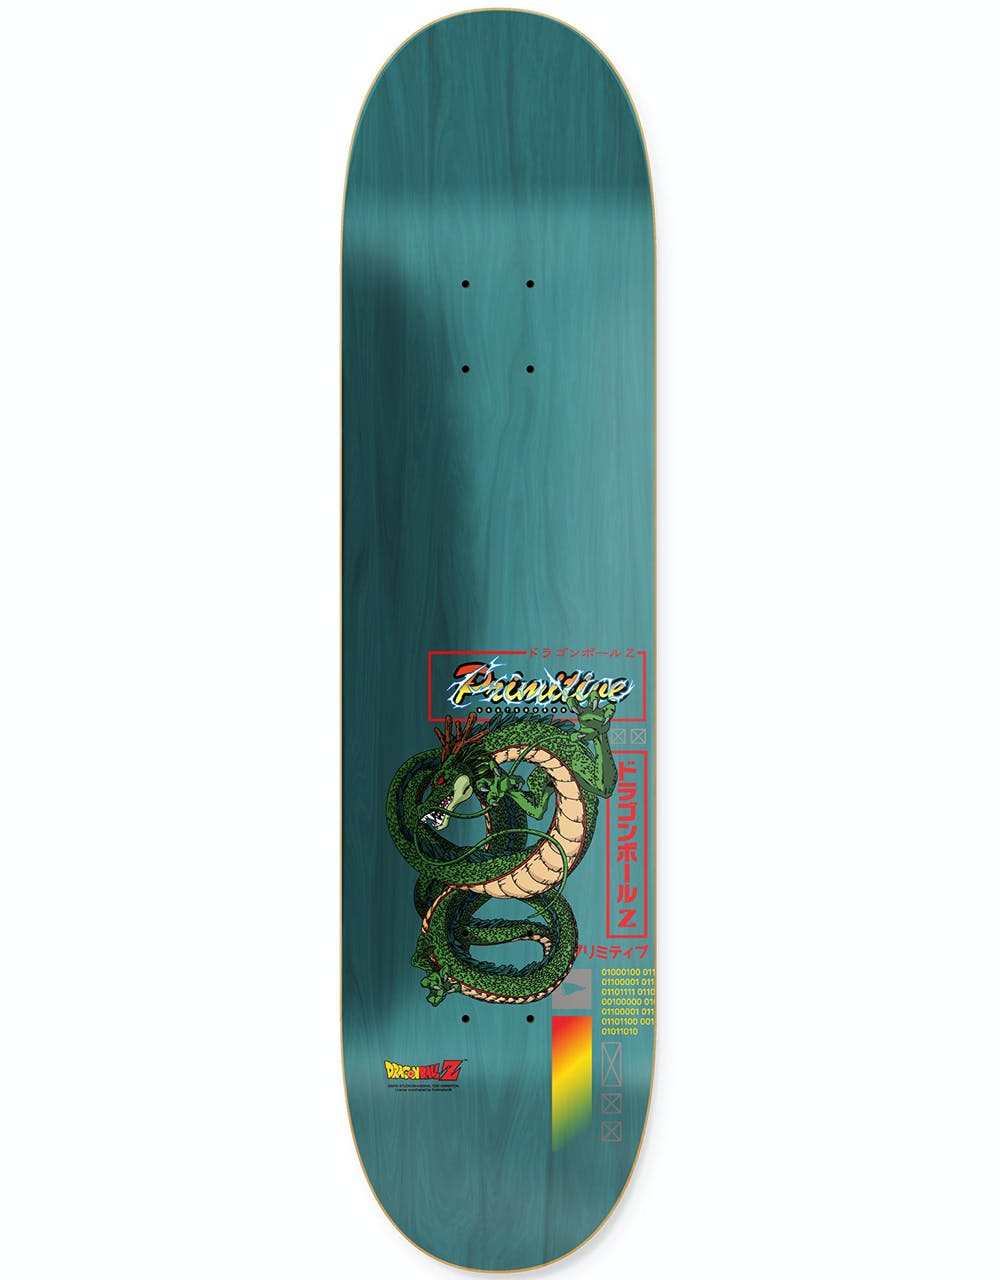 Primitive x Dragon Ball Z Calloway Piccolo Skateboard Deck - 8.5"